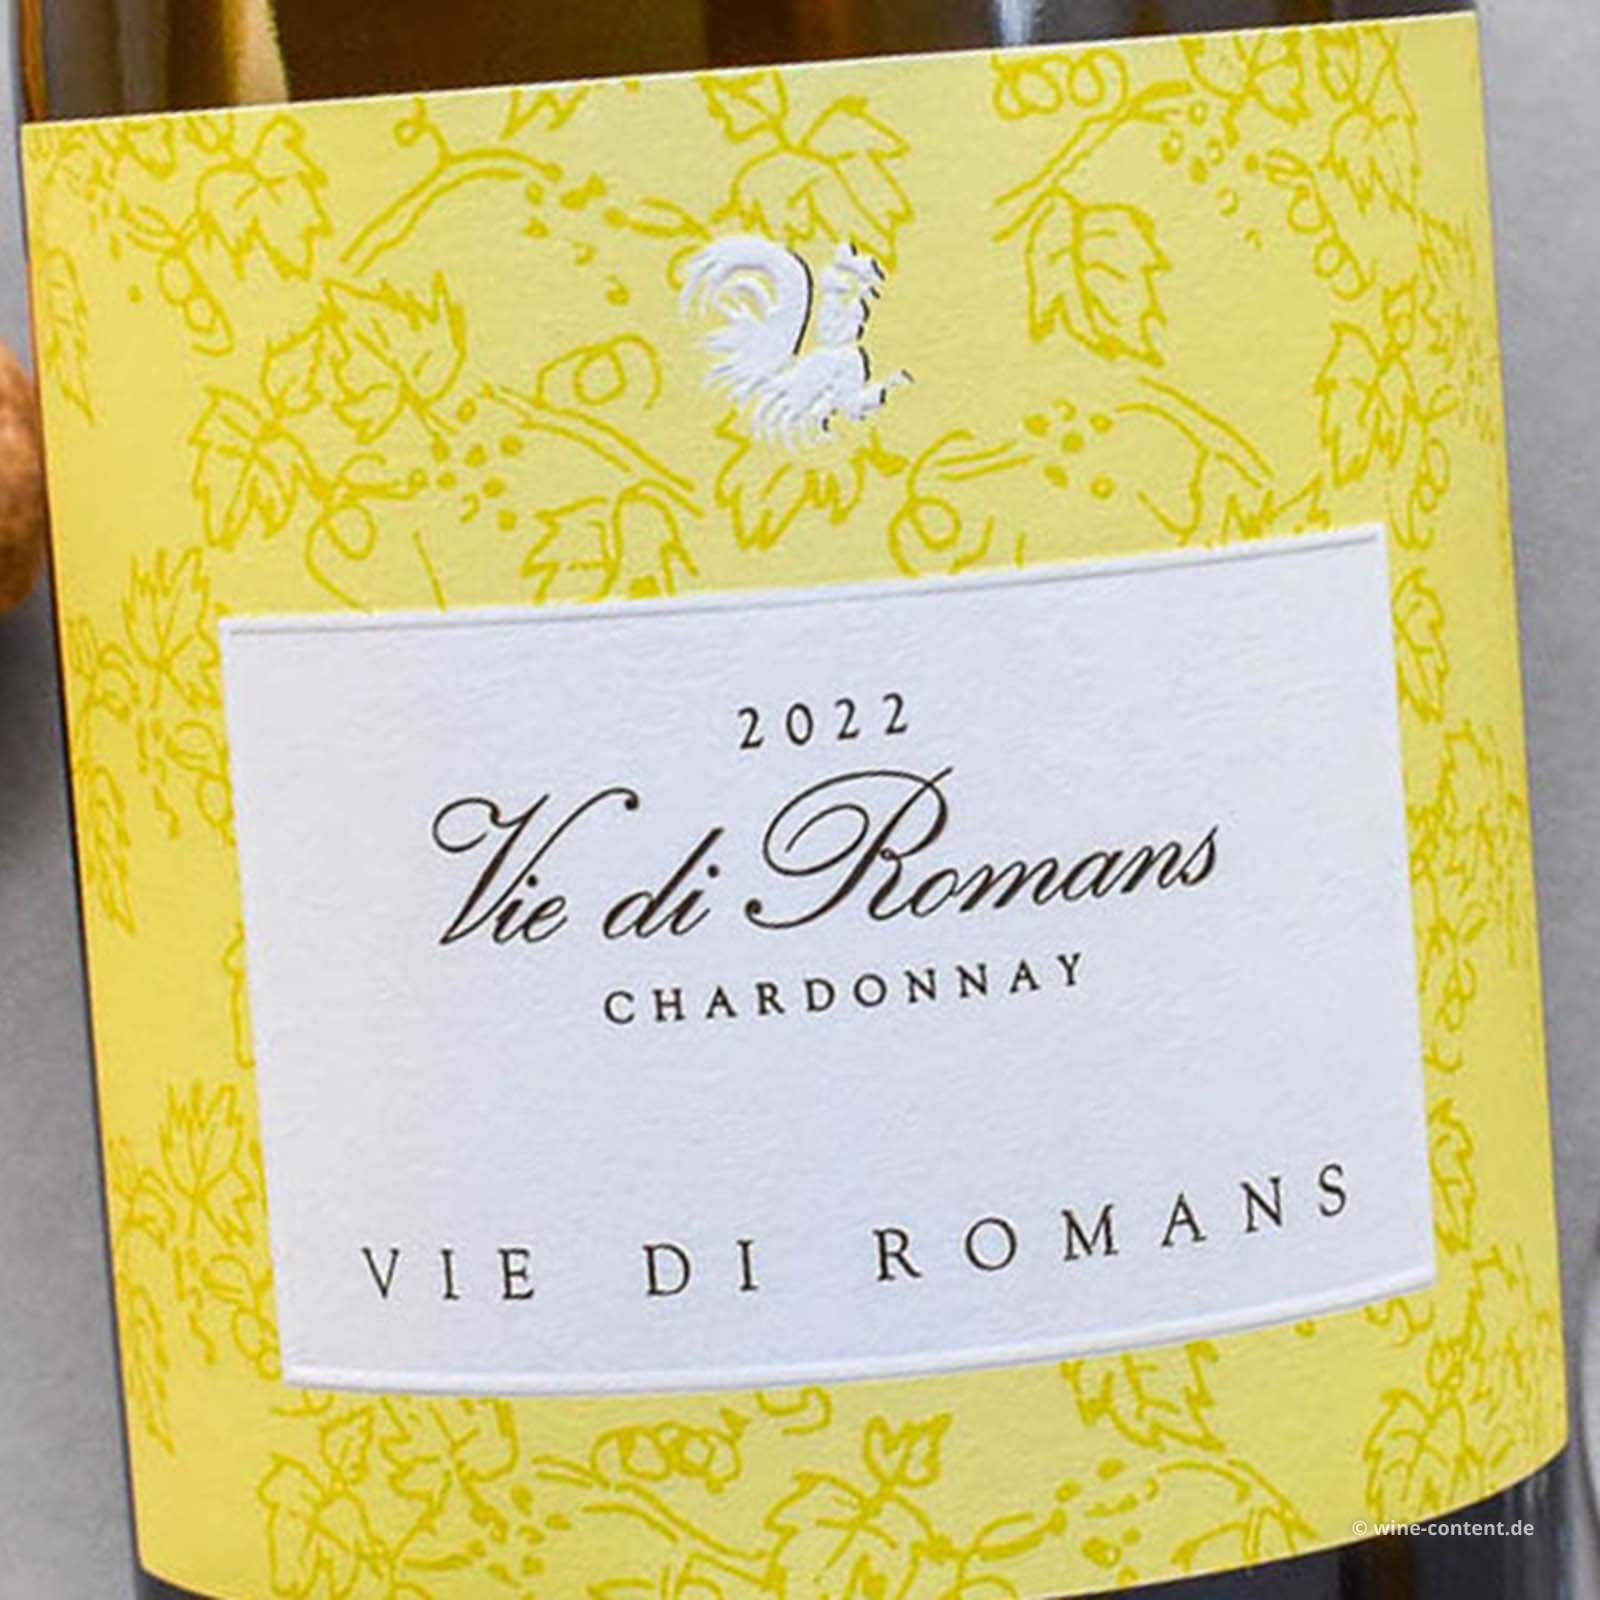 Chardonnay 2022 Vie di Romans